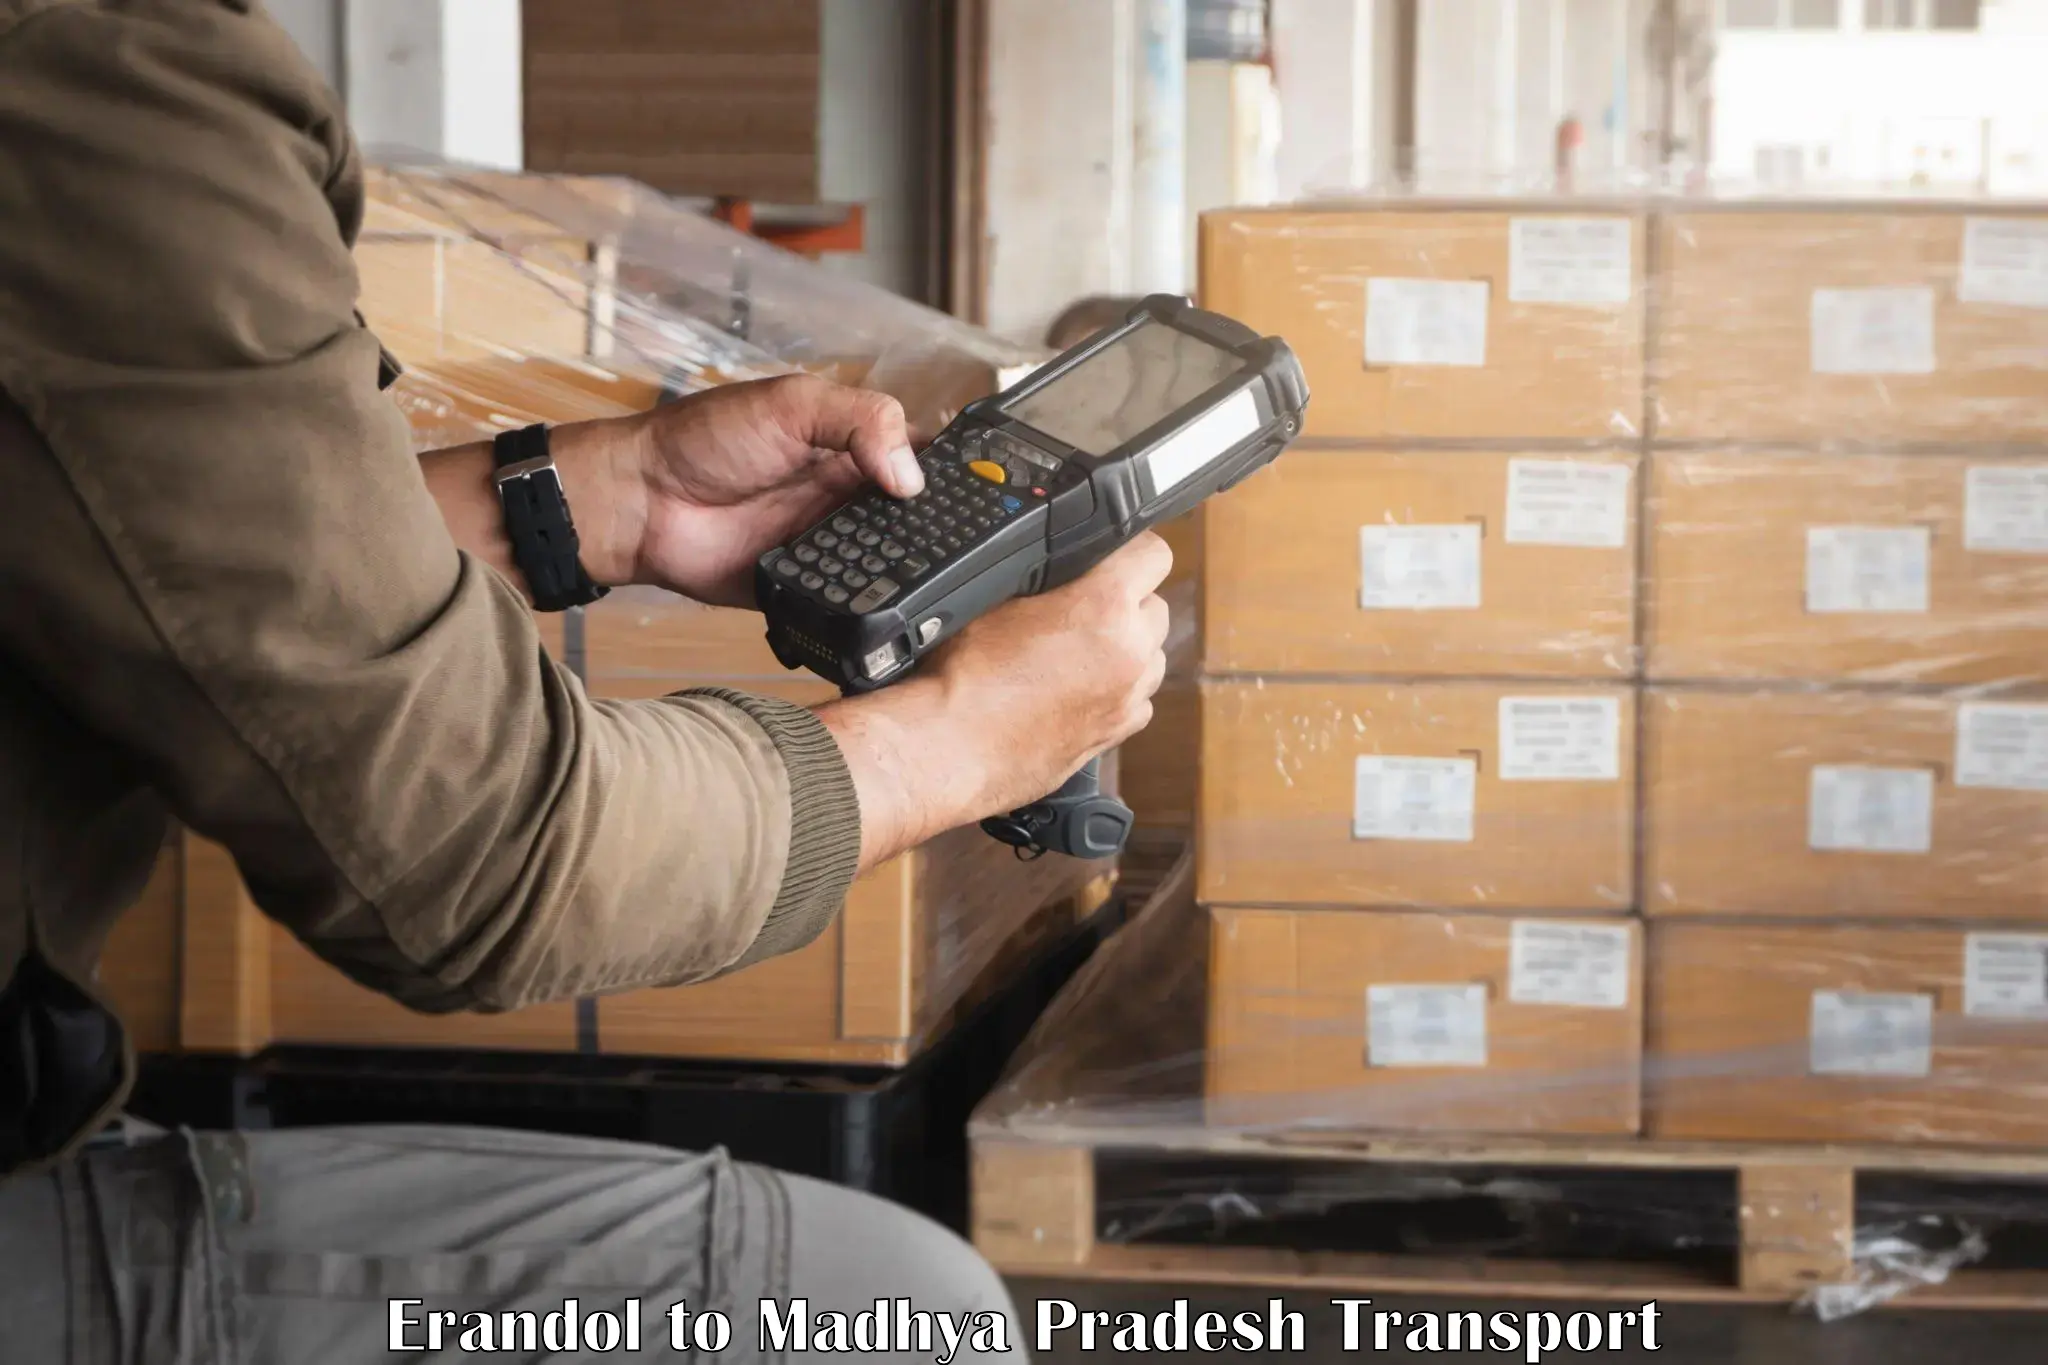 Goods delivery service Erandol to Bhind